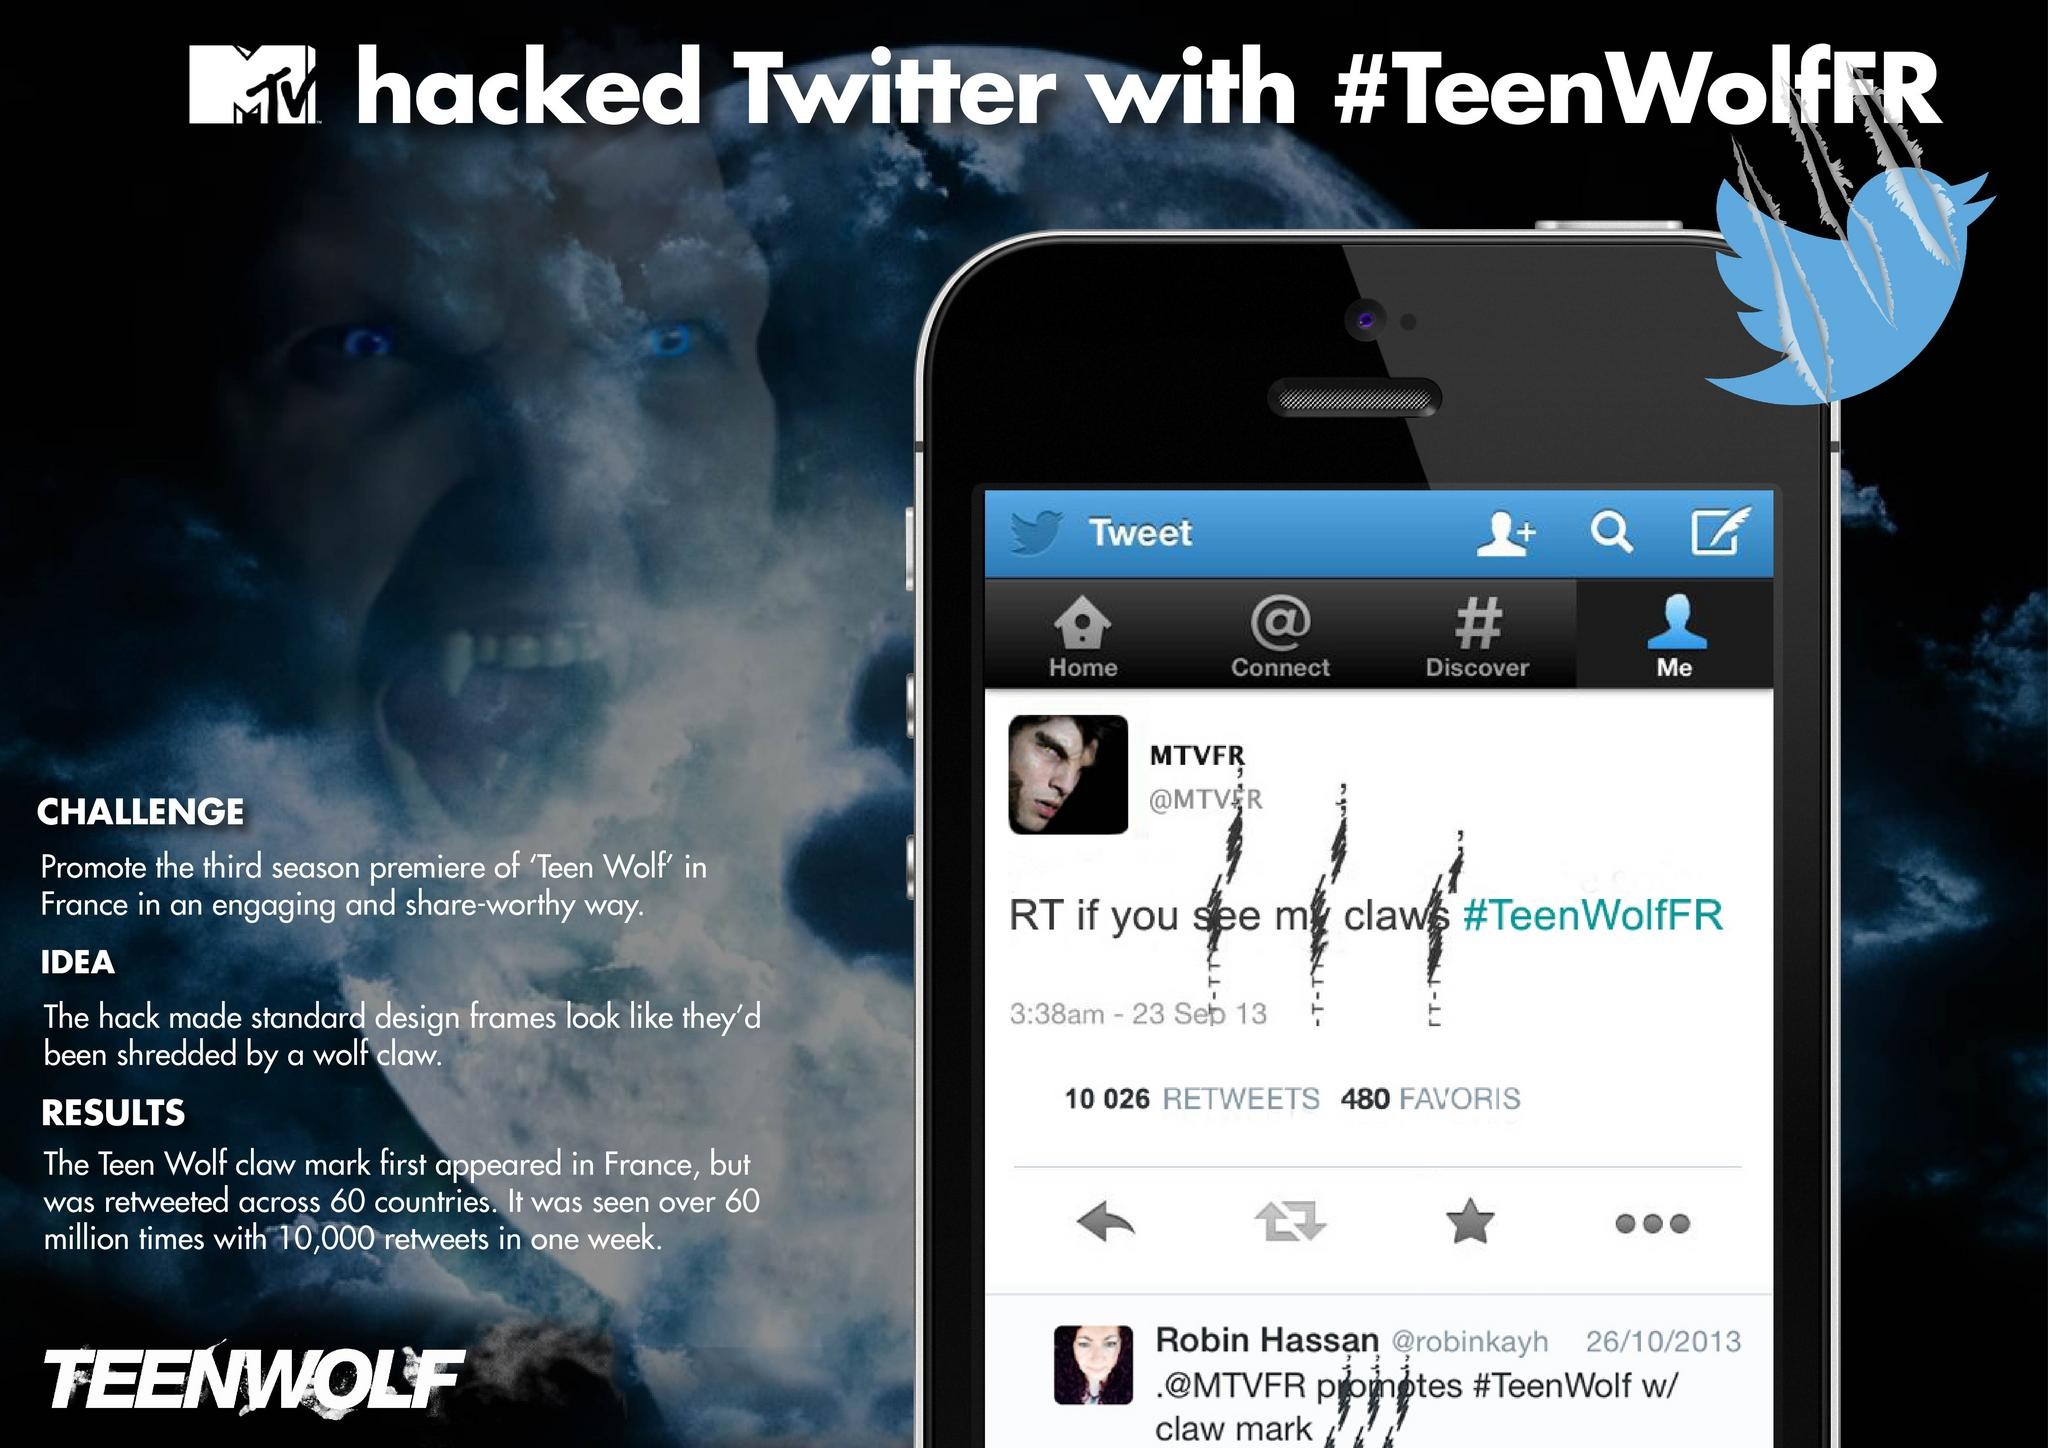 @MTVFR HACKED TWITTER WITH #TEENWOLFFR